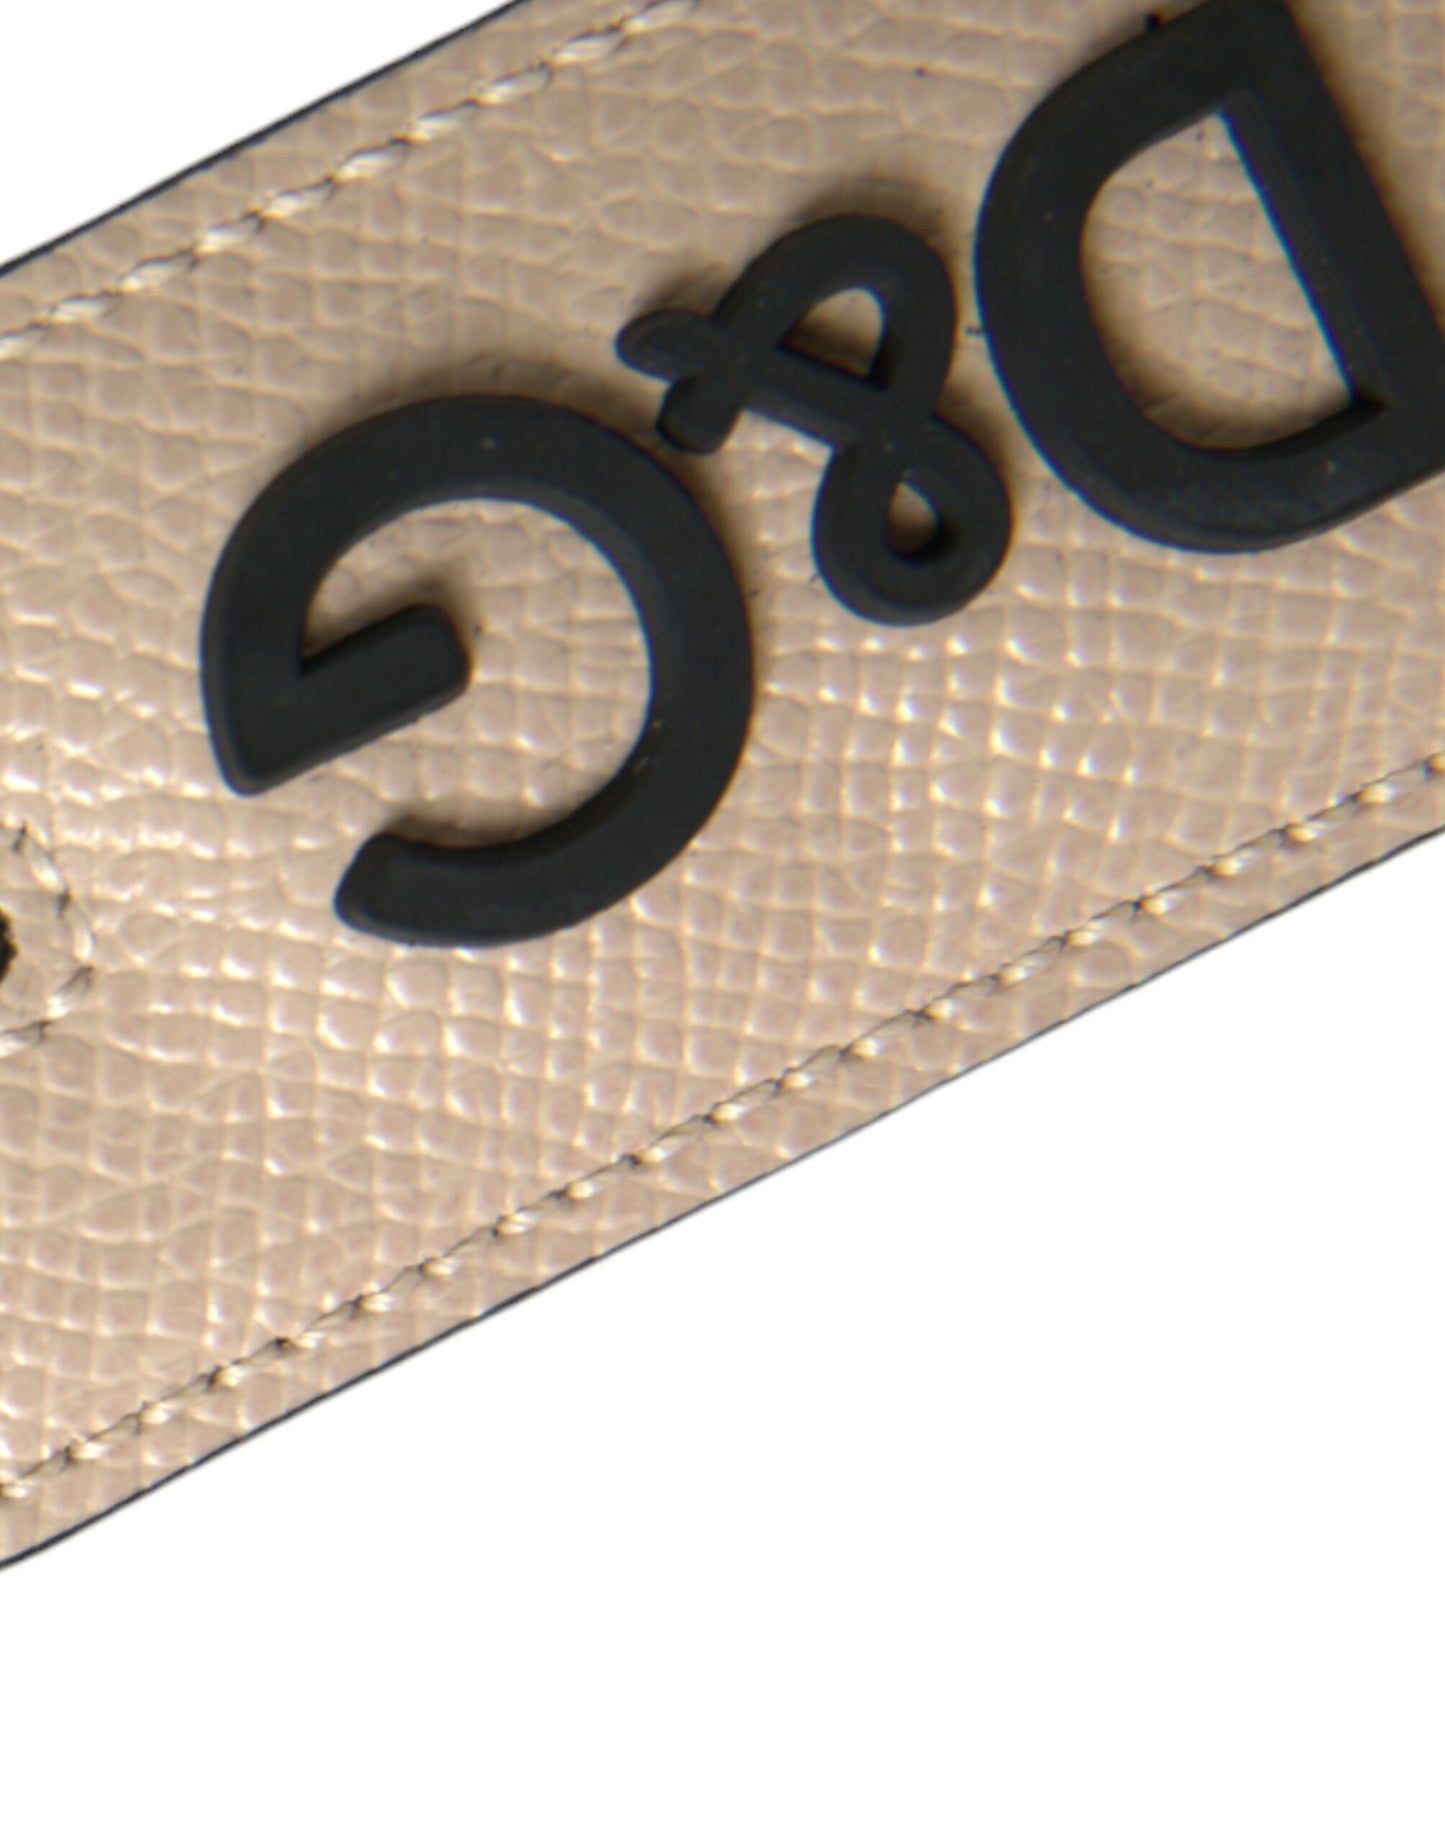 Beige Calf Leather DG Logo Silver Brass Keyring Keychain